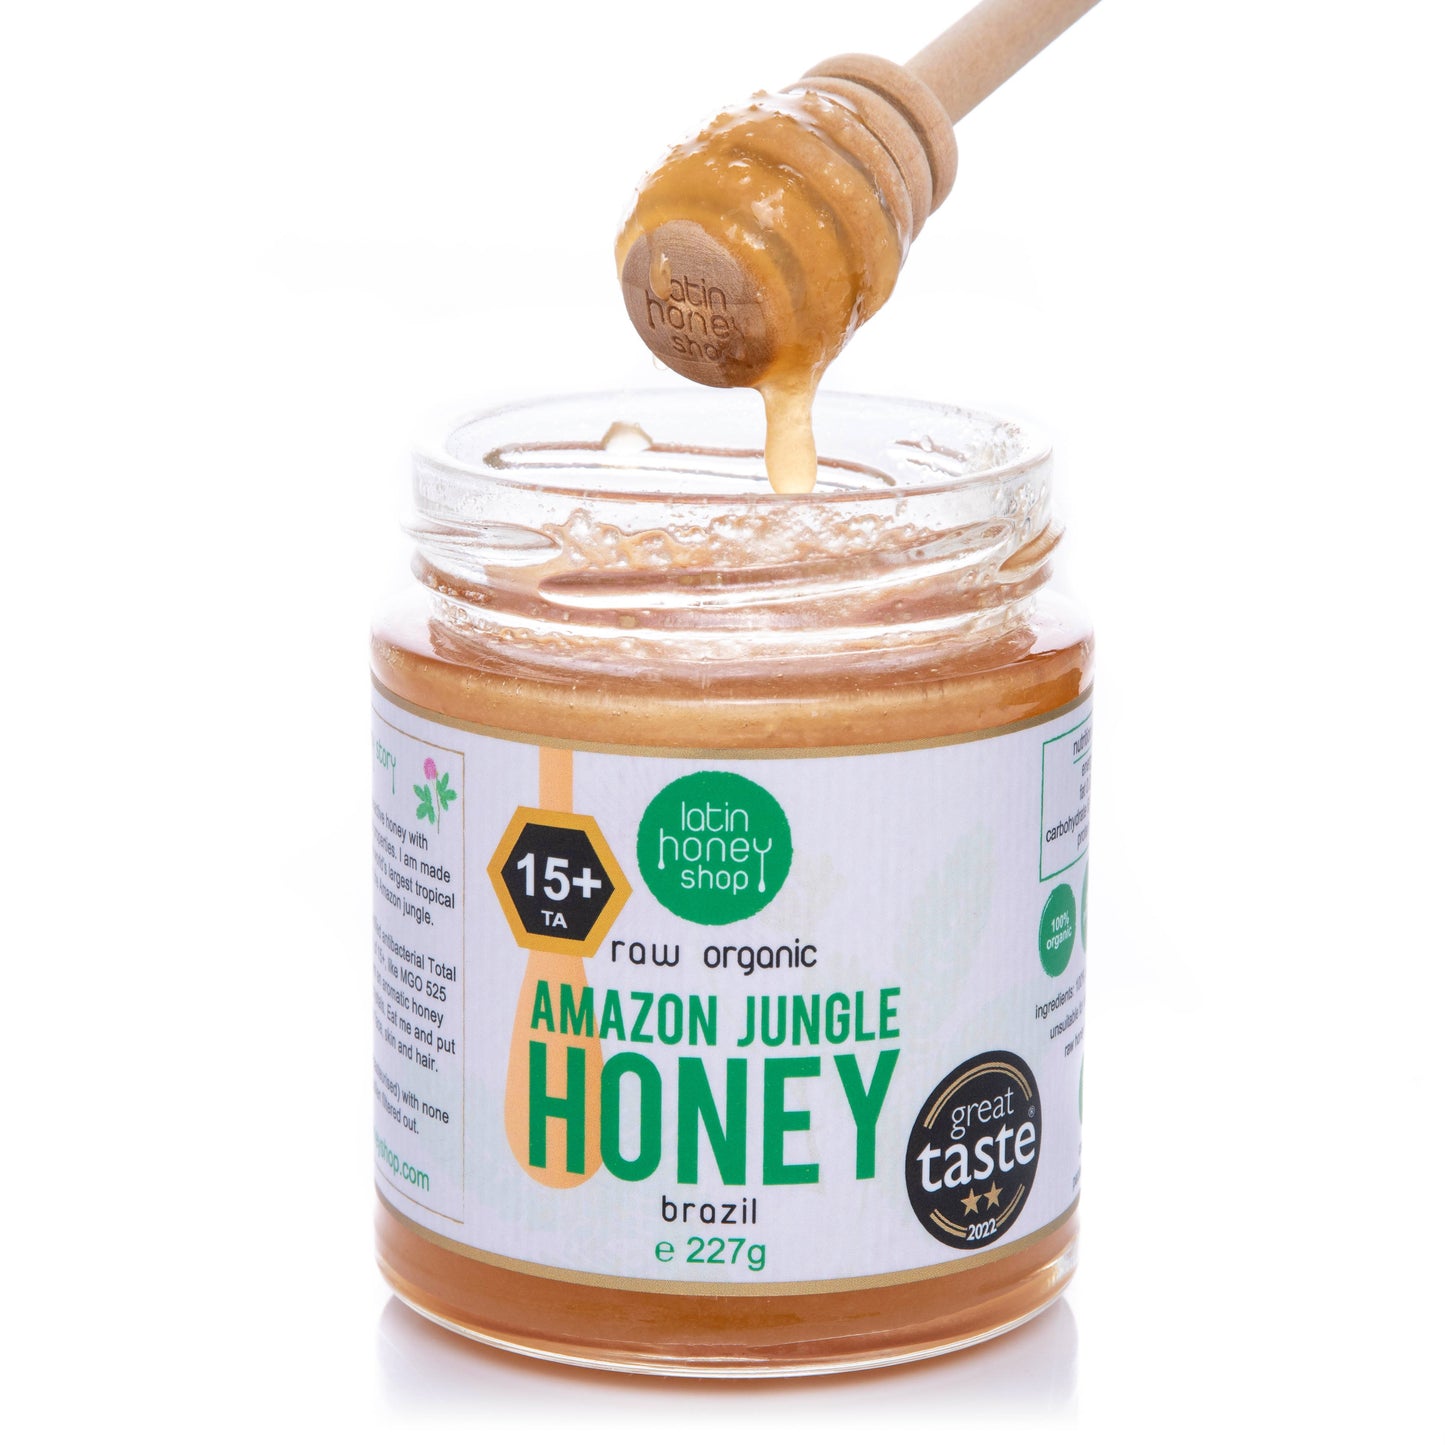 Latin Honey Shop 15+ Raw Organic Amazon Jungle Honey Brazil